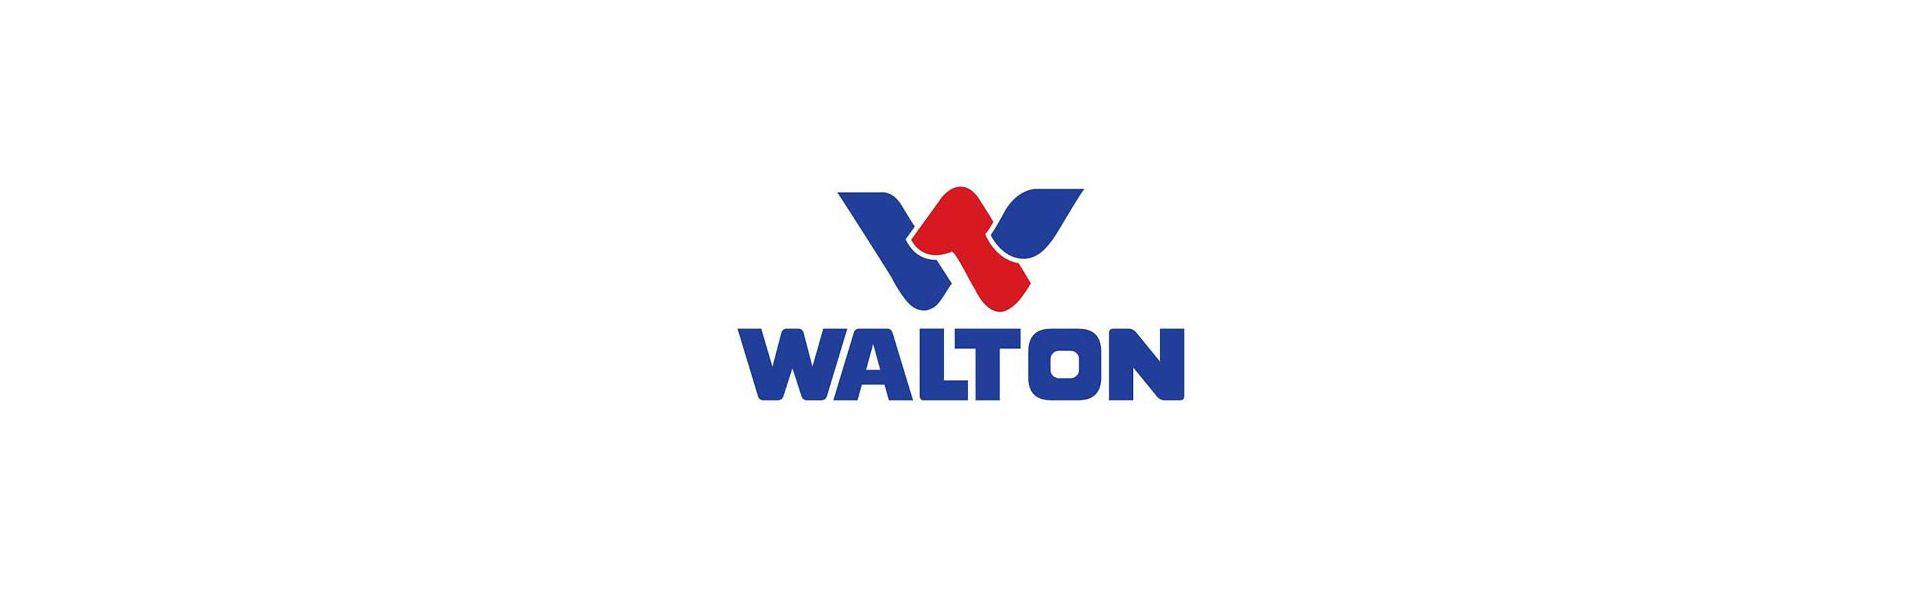 Walton Logo - Walton At Every Home